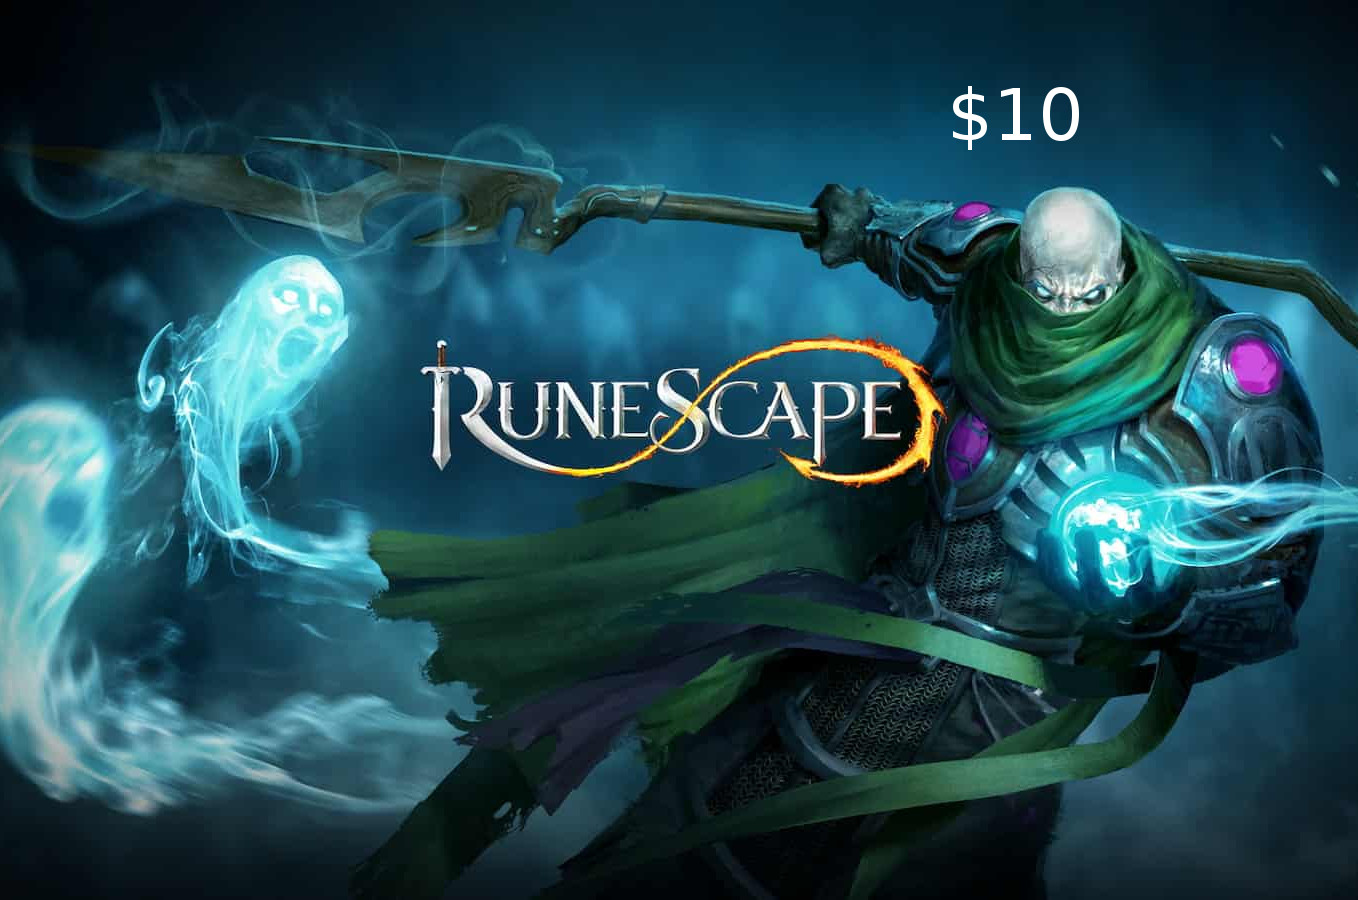 [$ 10.11] Runescape $10 Prepaid Game Card